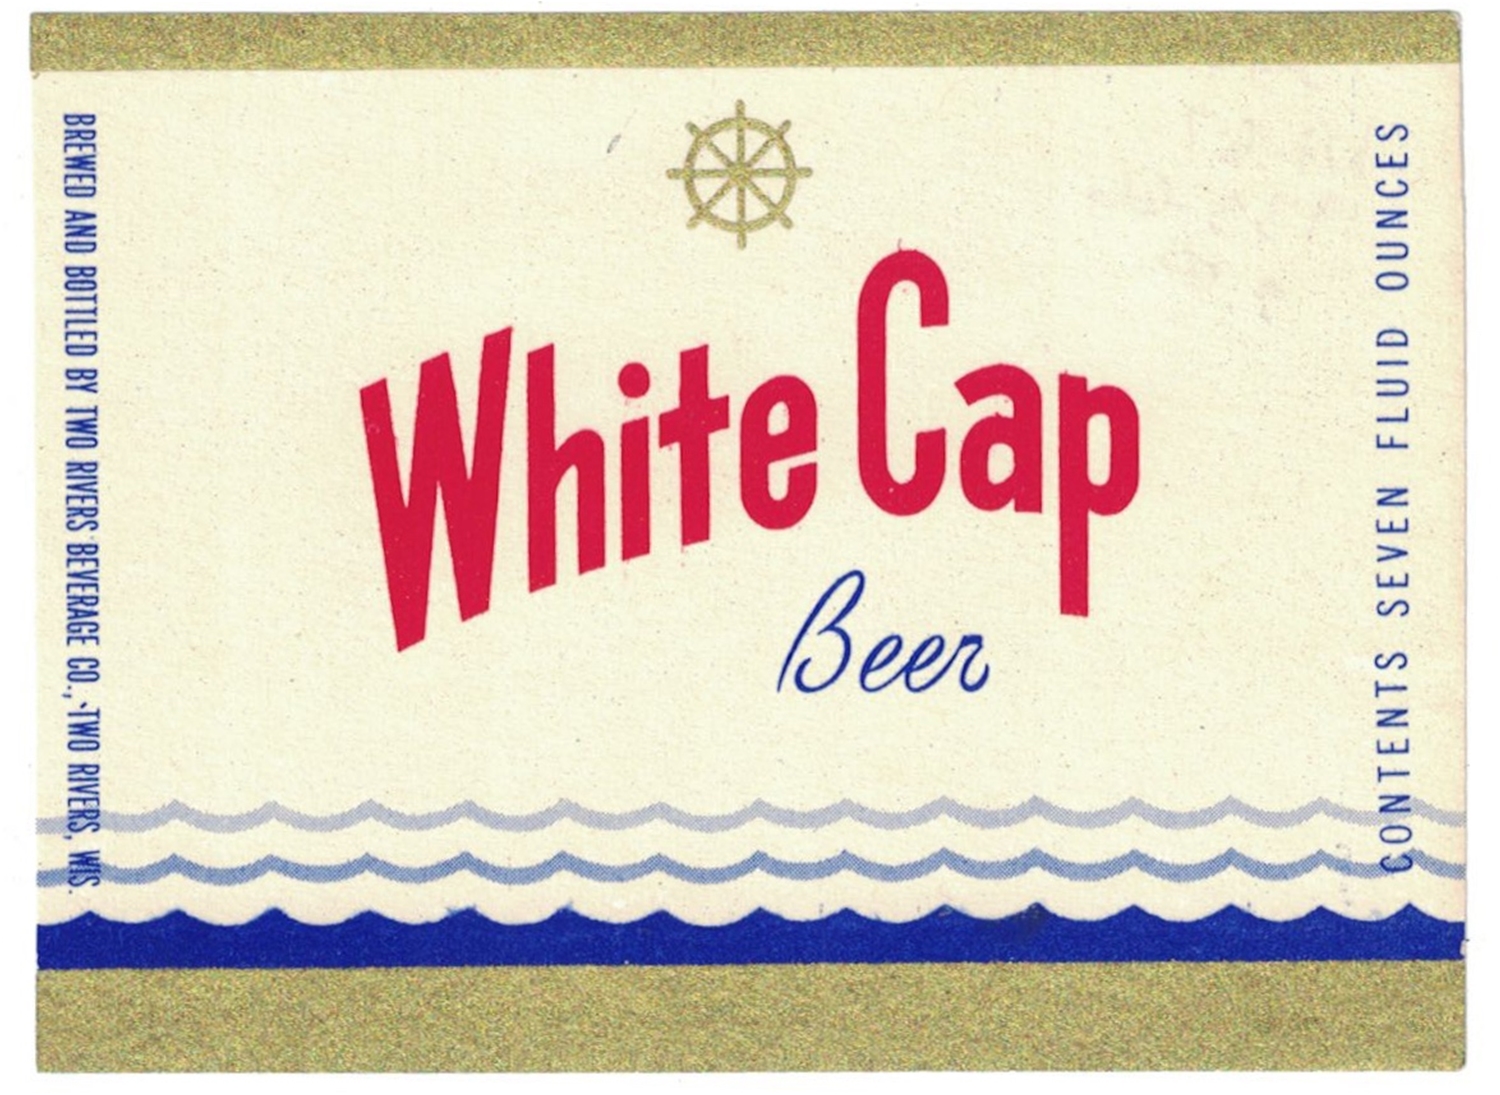 White Cap Beer Label